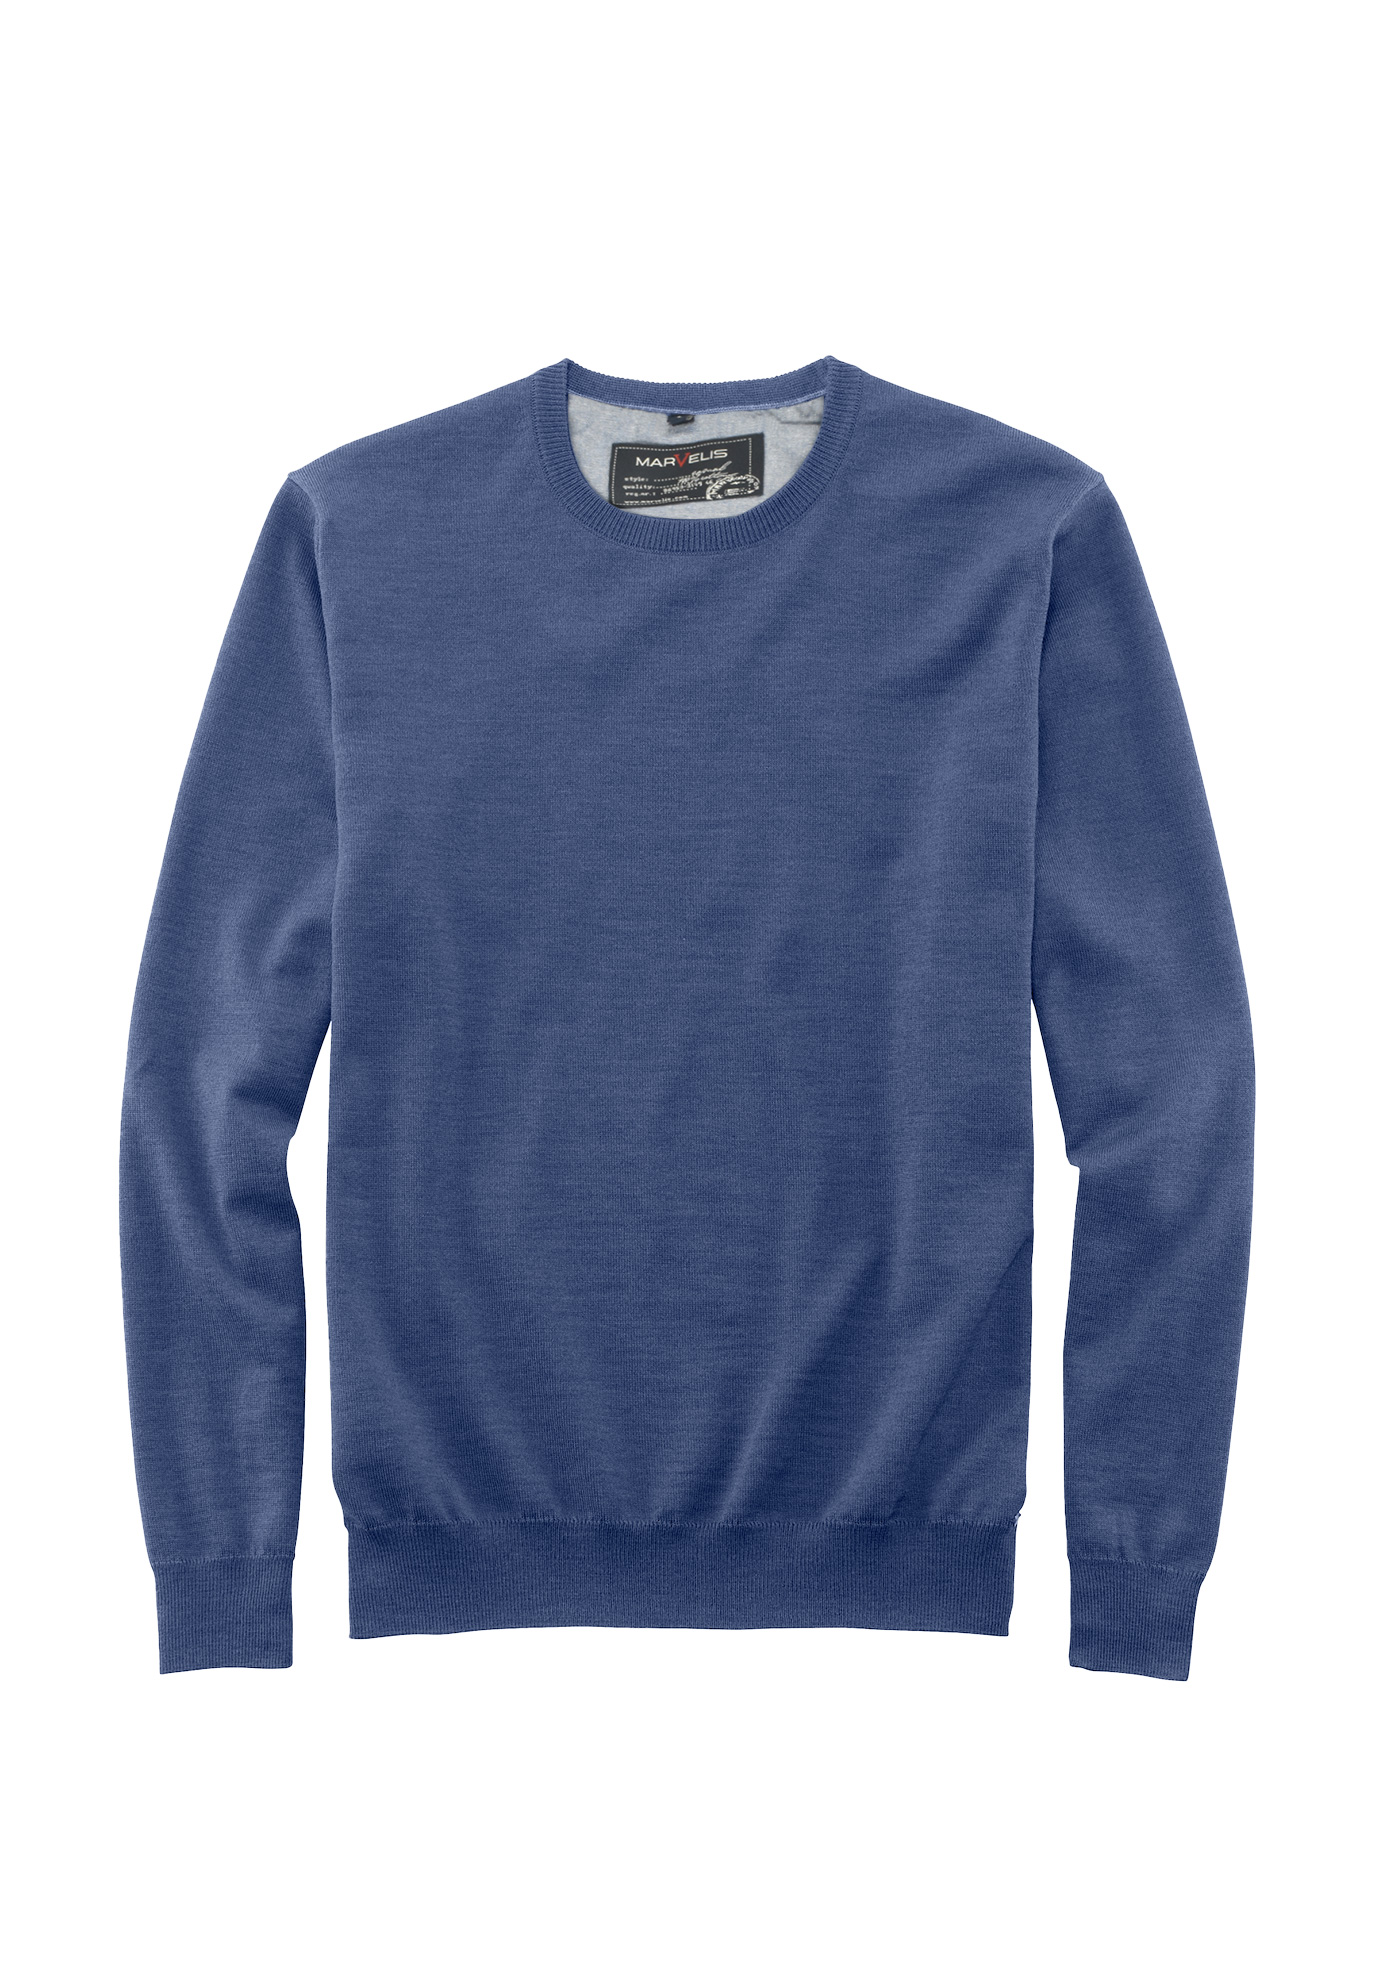 Пуловер MARVELIS, синий жакет на пуговицах marvelis marvelis размер xl цвет серый арт 63151660